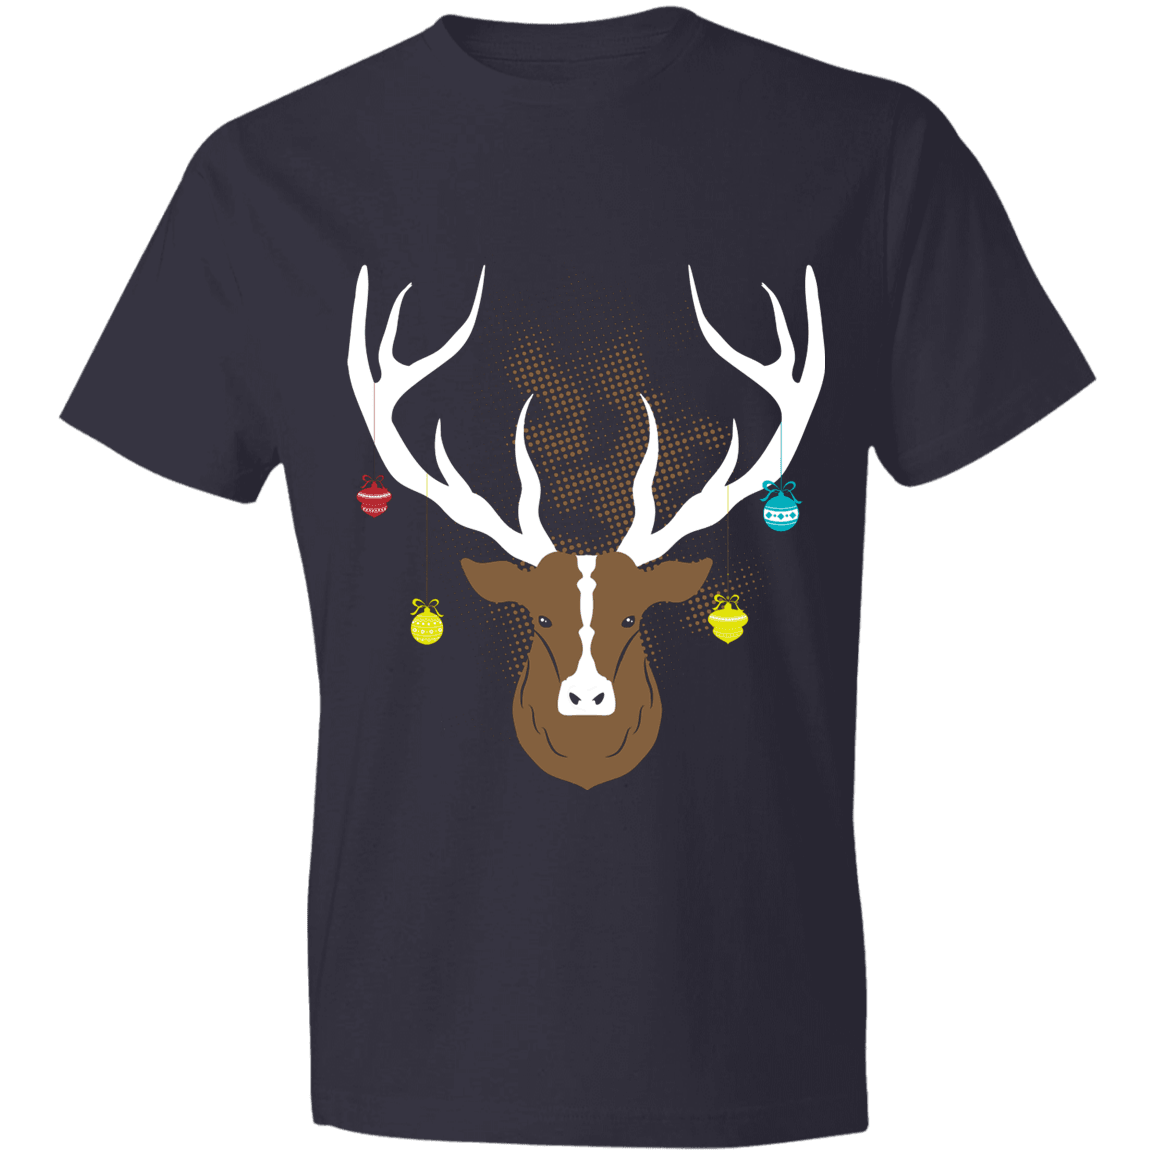 Designs by MyUtopia Shout Out:Christmas Deer - Lightweight Unisex T-Shirt,Navy / S,Adult Unisex T-Shirt